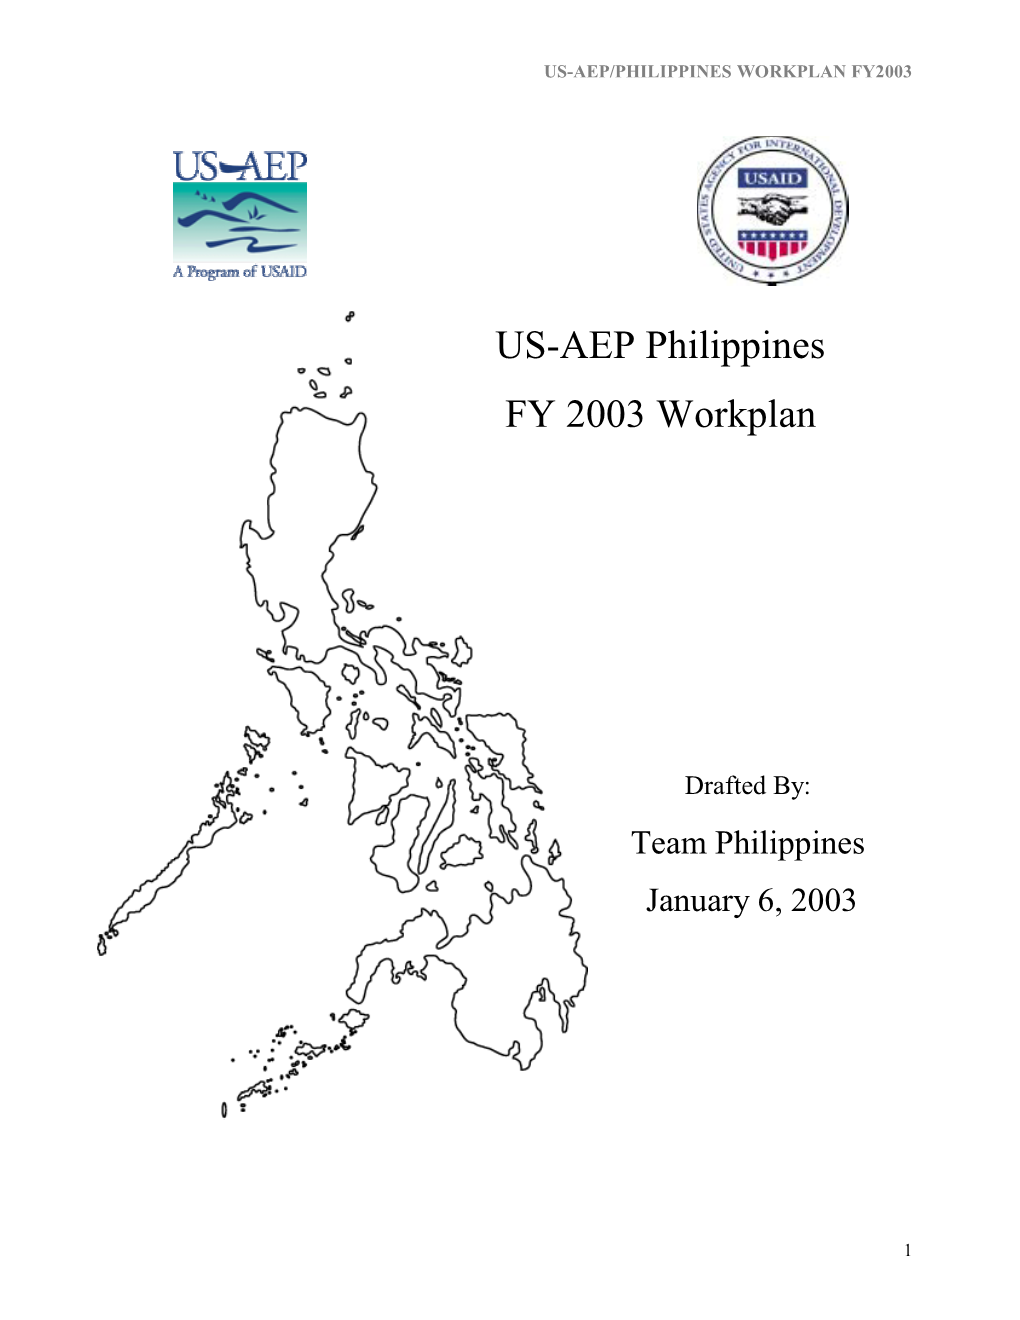 US-AEP Philippines FY 2003 Workplan